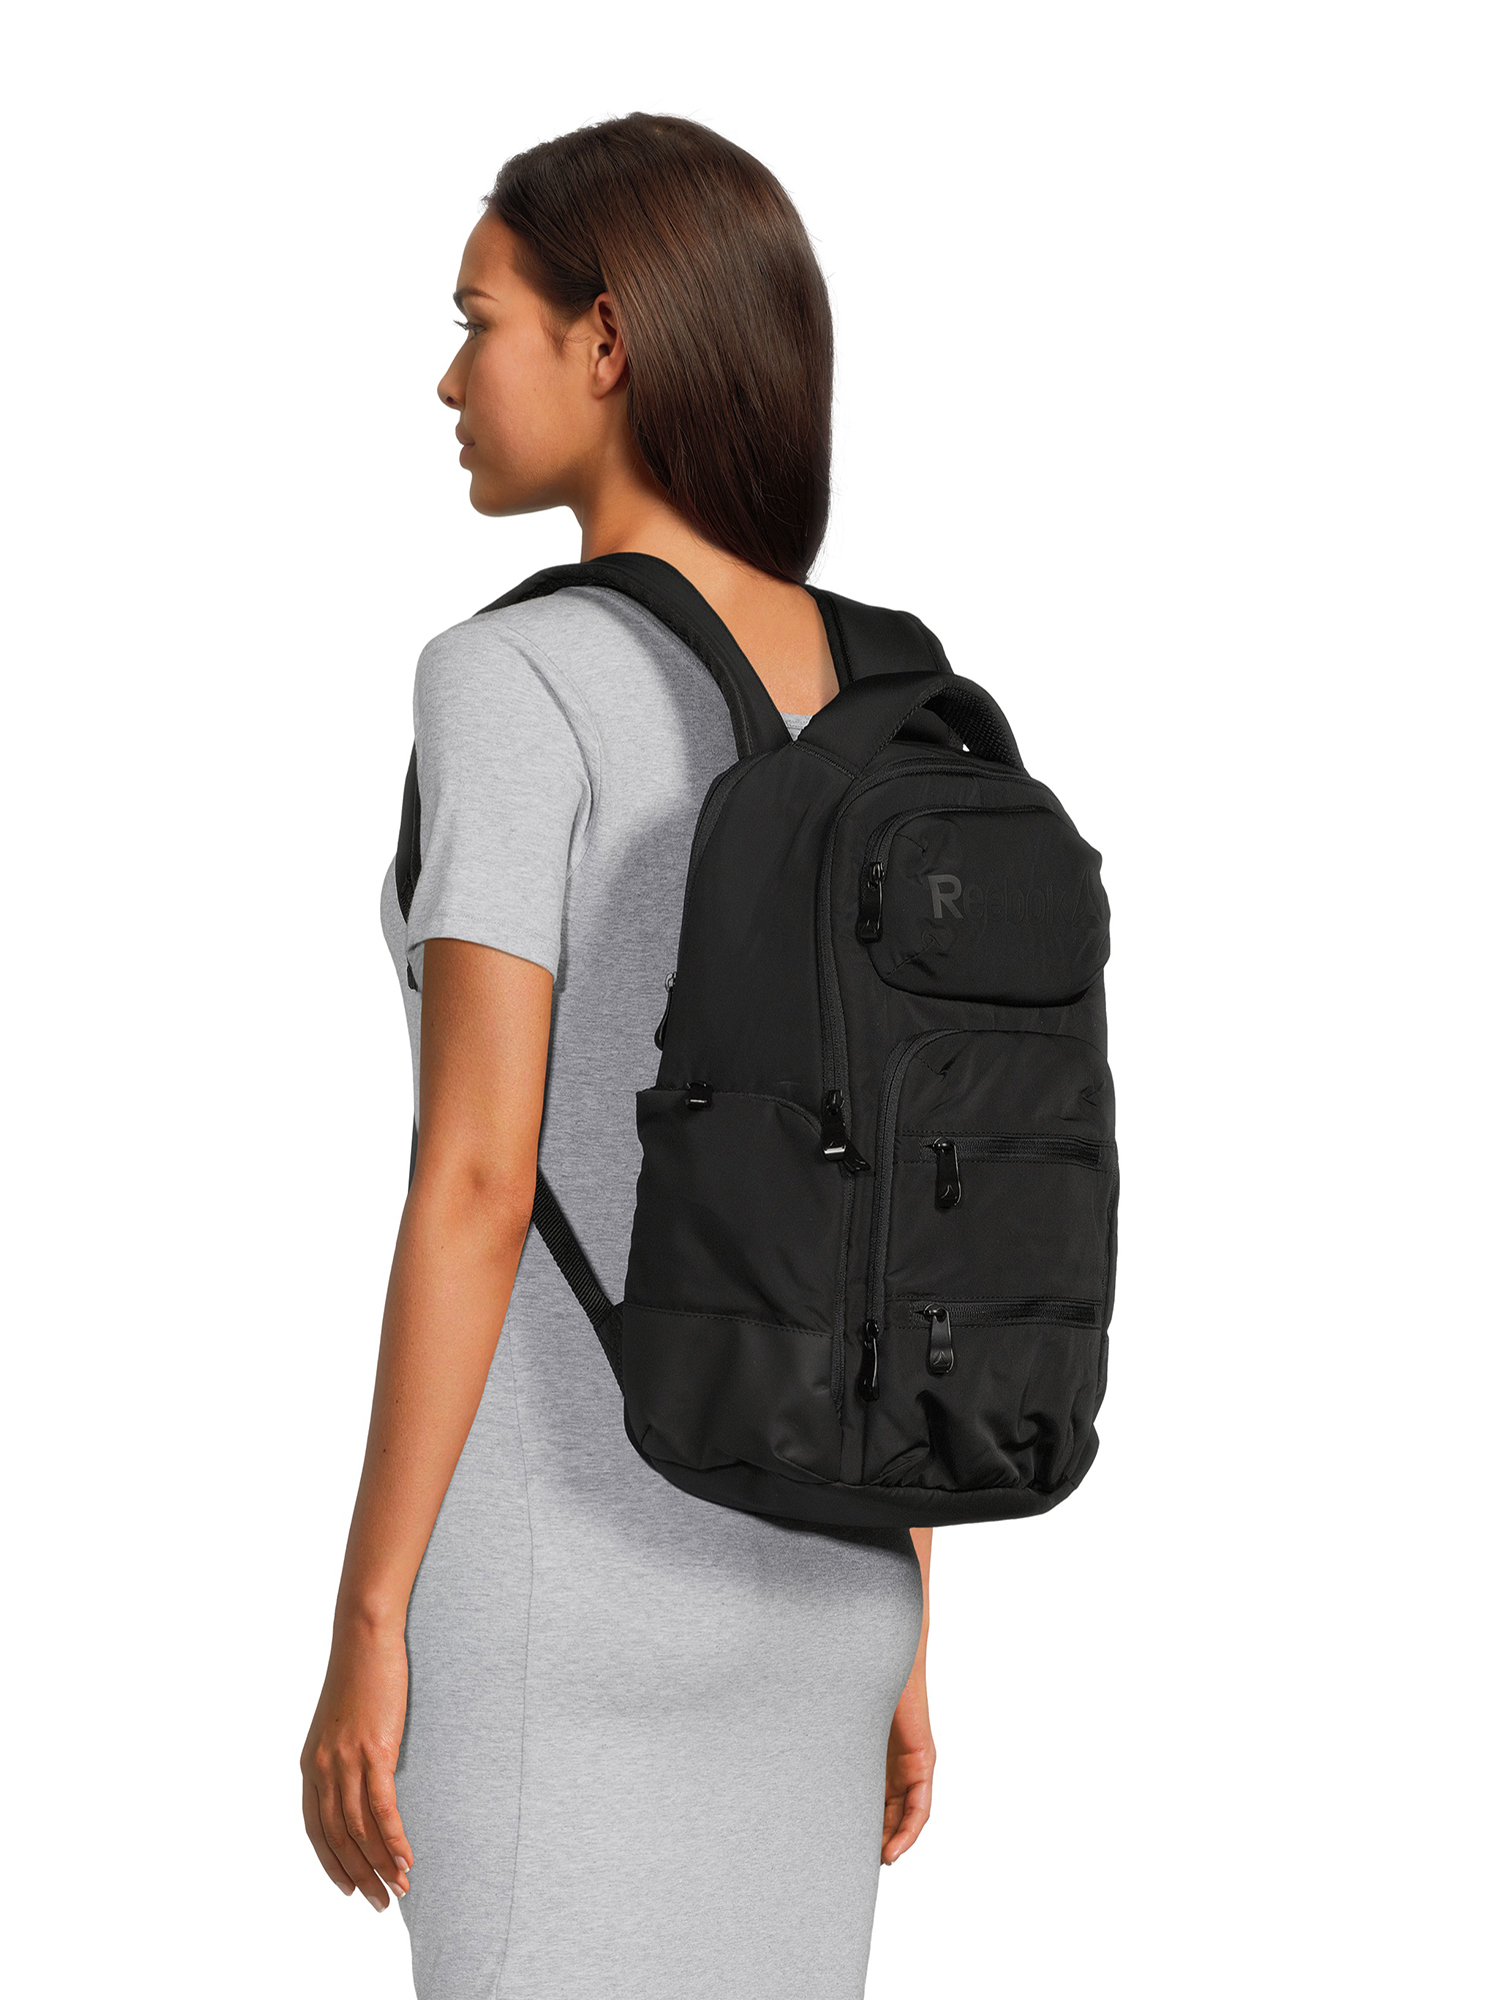 Reebok Unisex Adult Winter 16" Laptop Backpack, Black - image 2 of 6